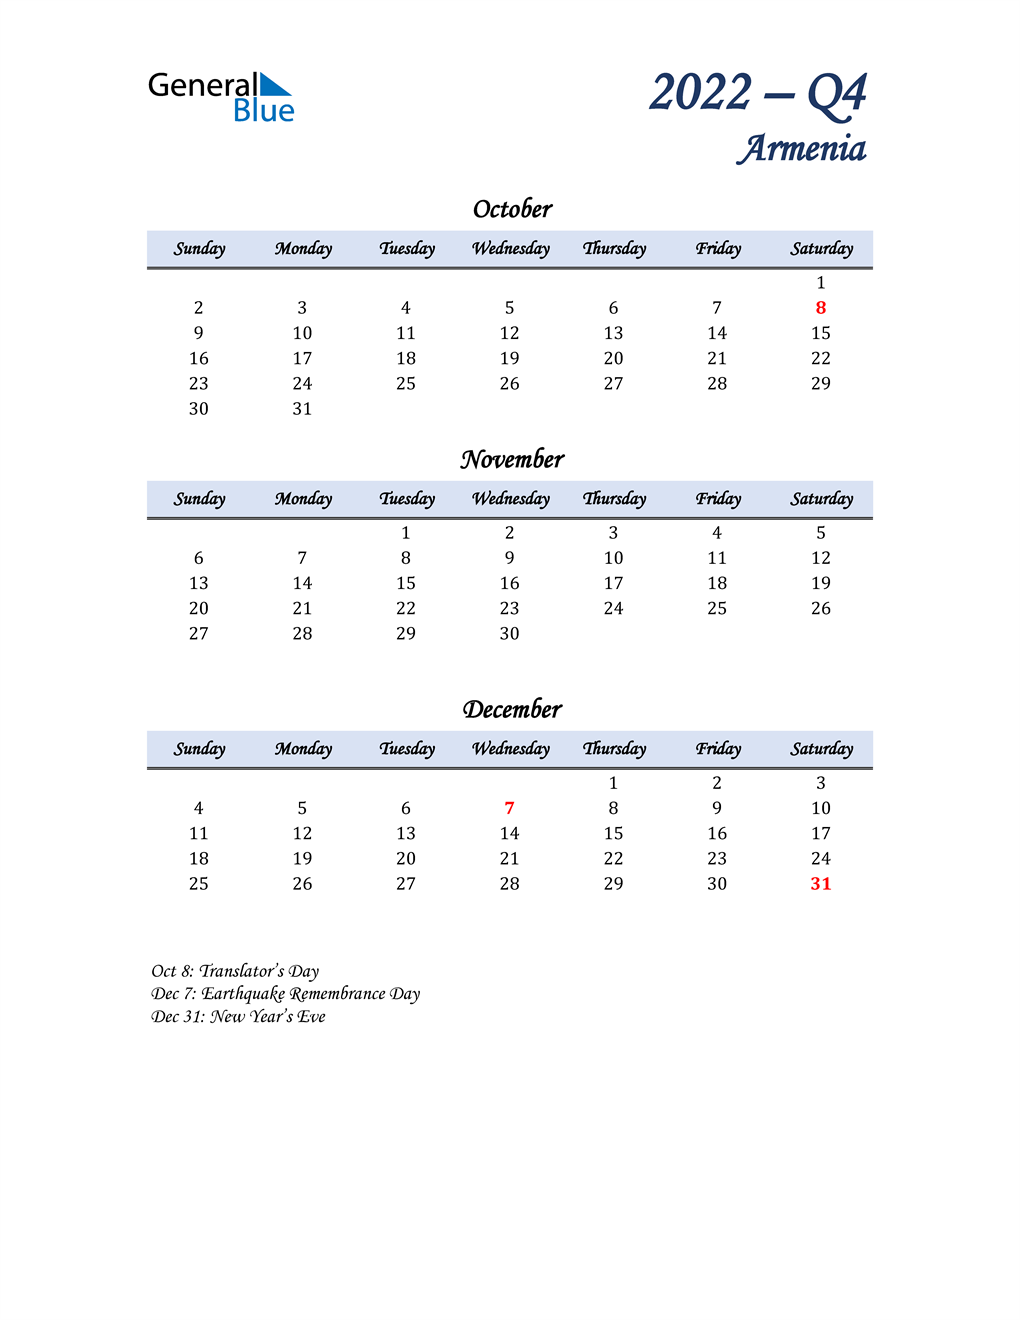  October, November, and December Calendar for Armenia